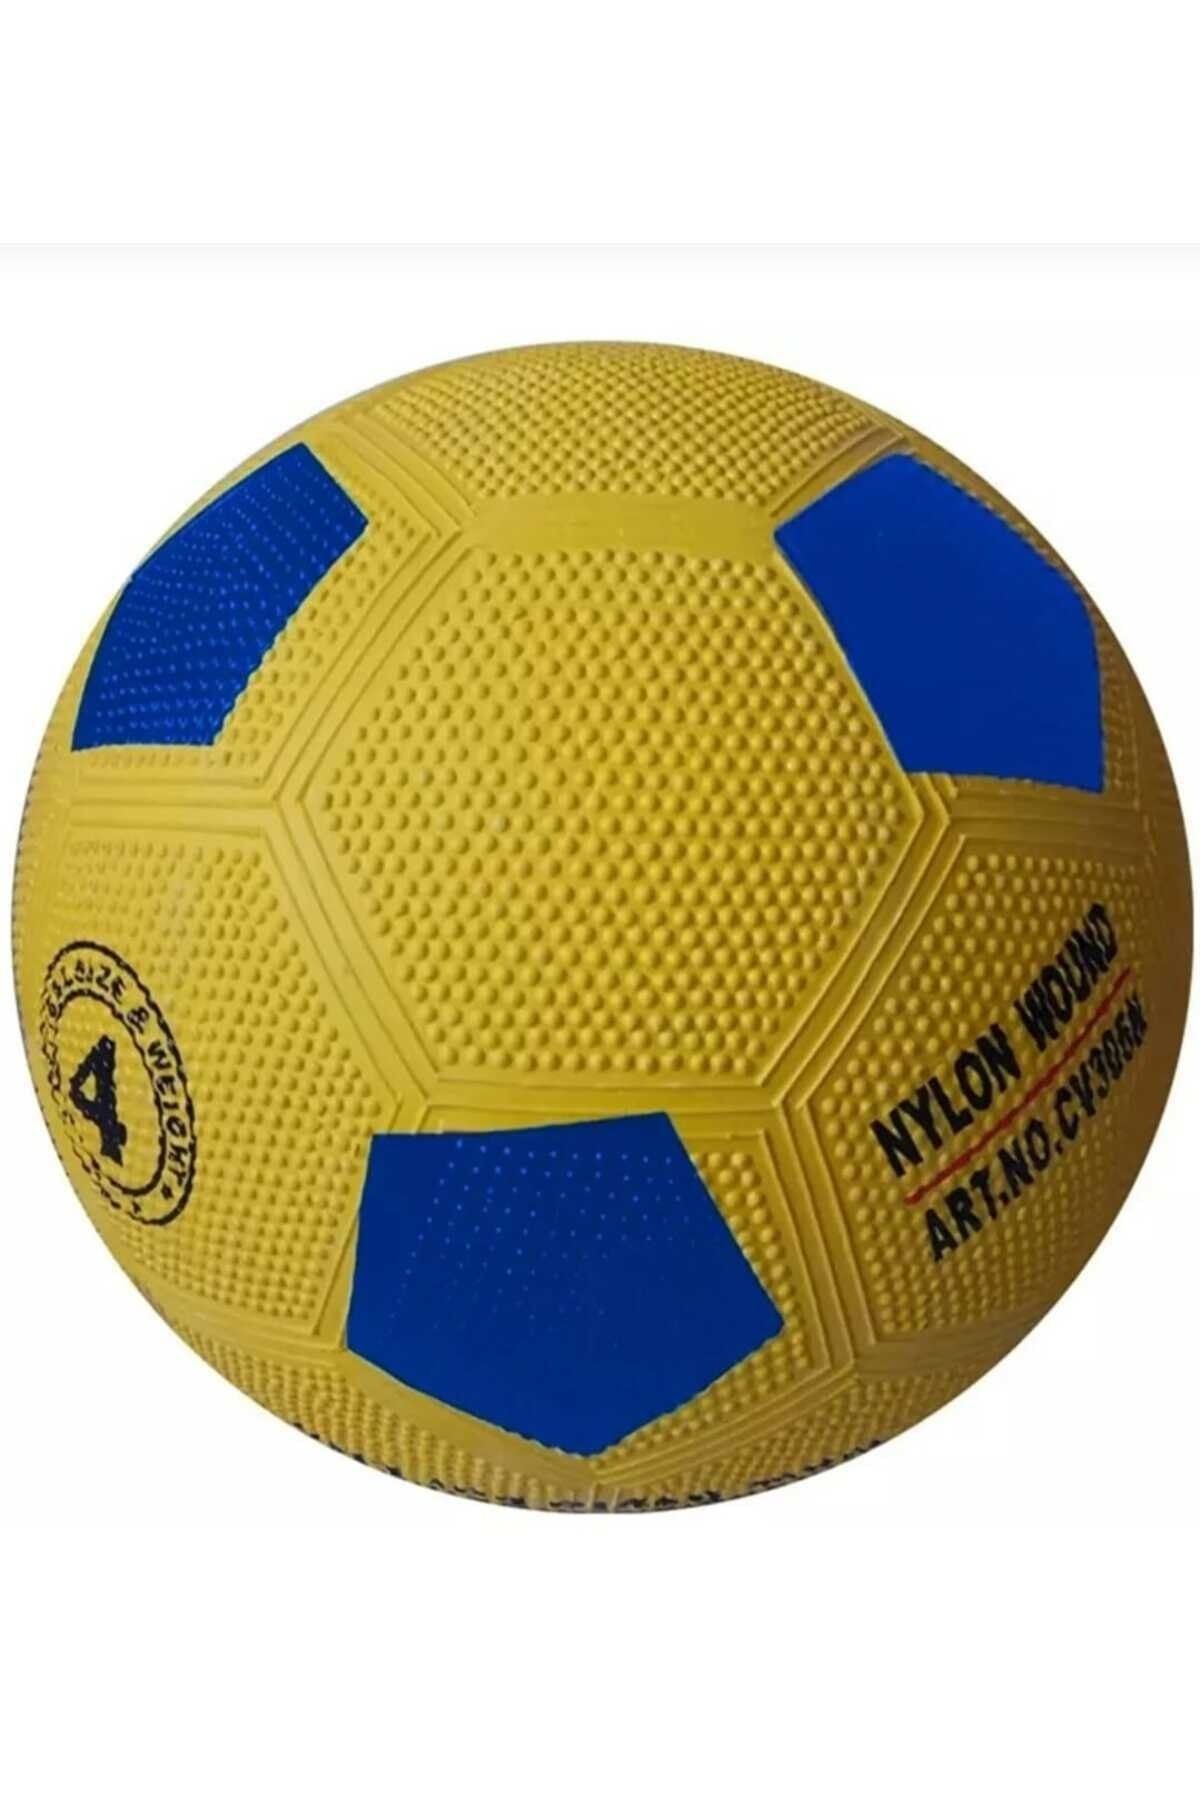 Hisar Kauçuk Futbol Topu Sarı Lacivert